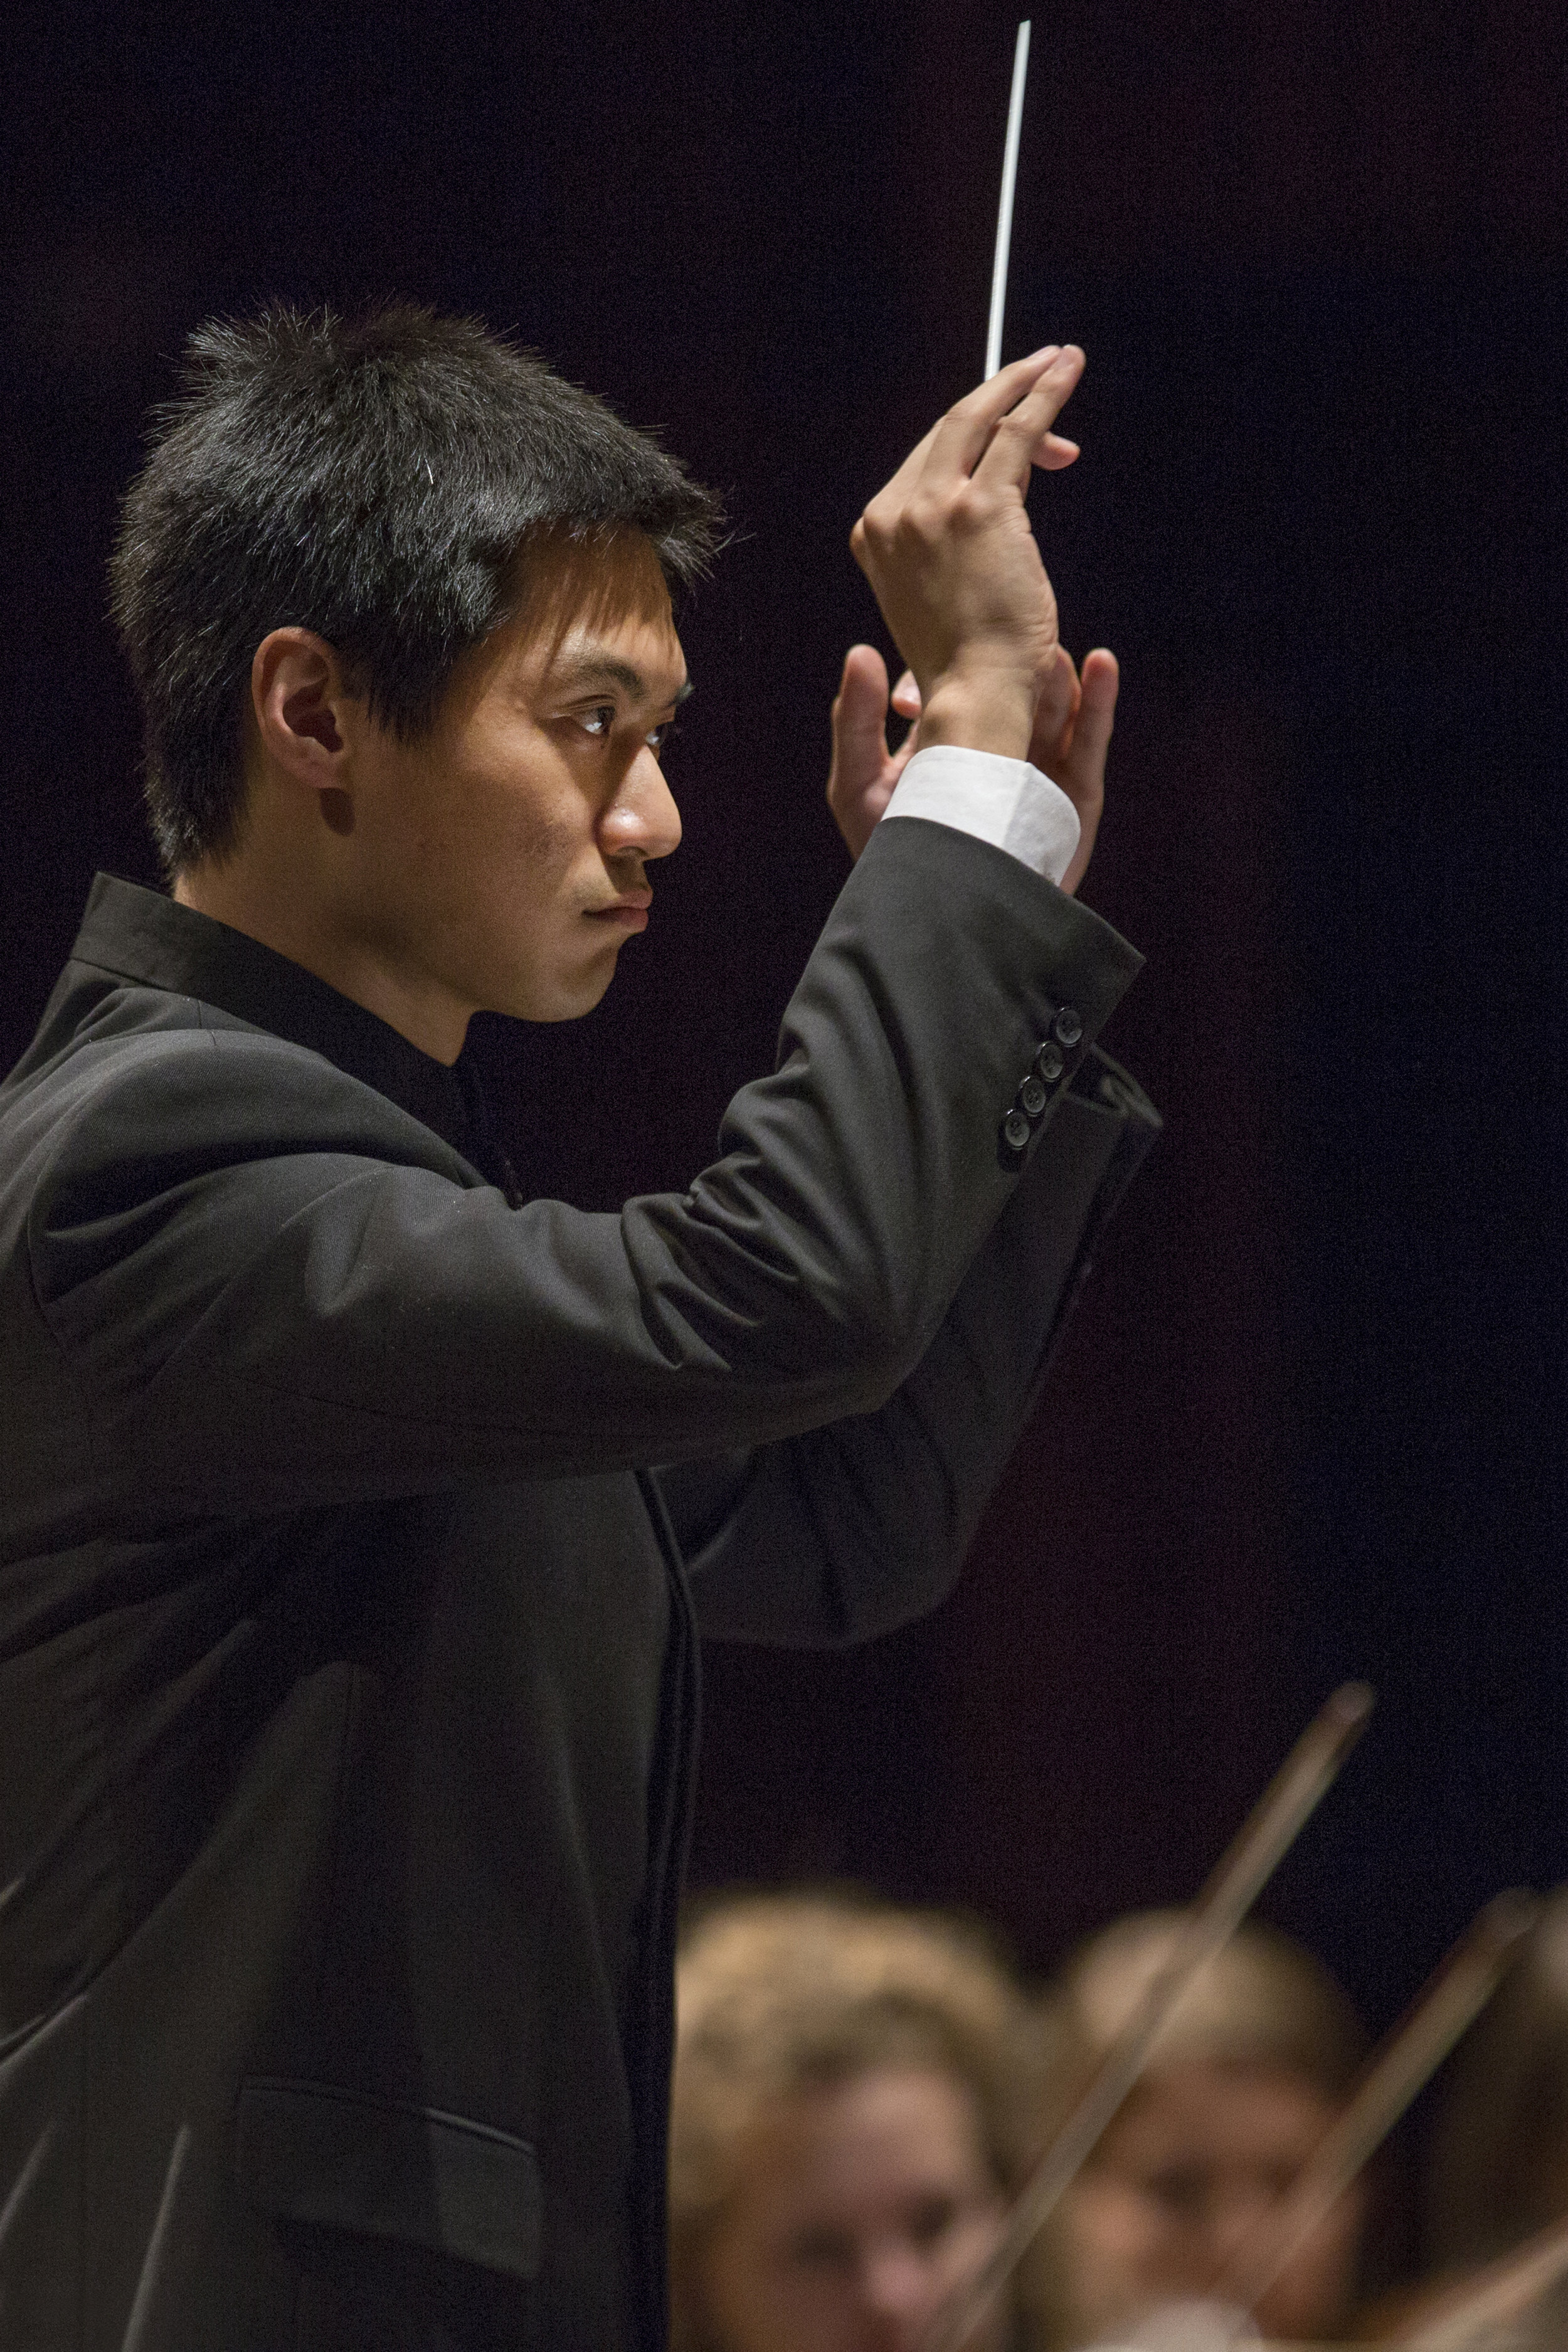 Conductor, James Chang